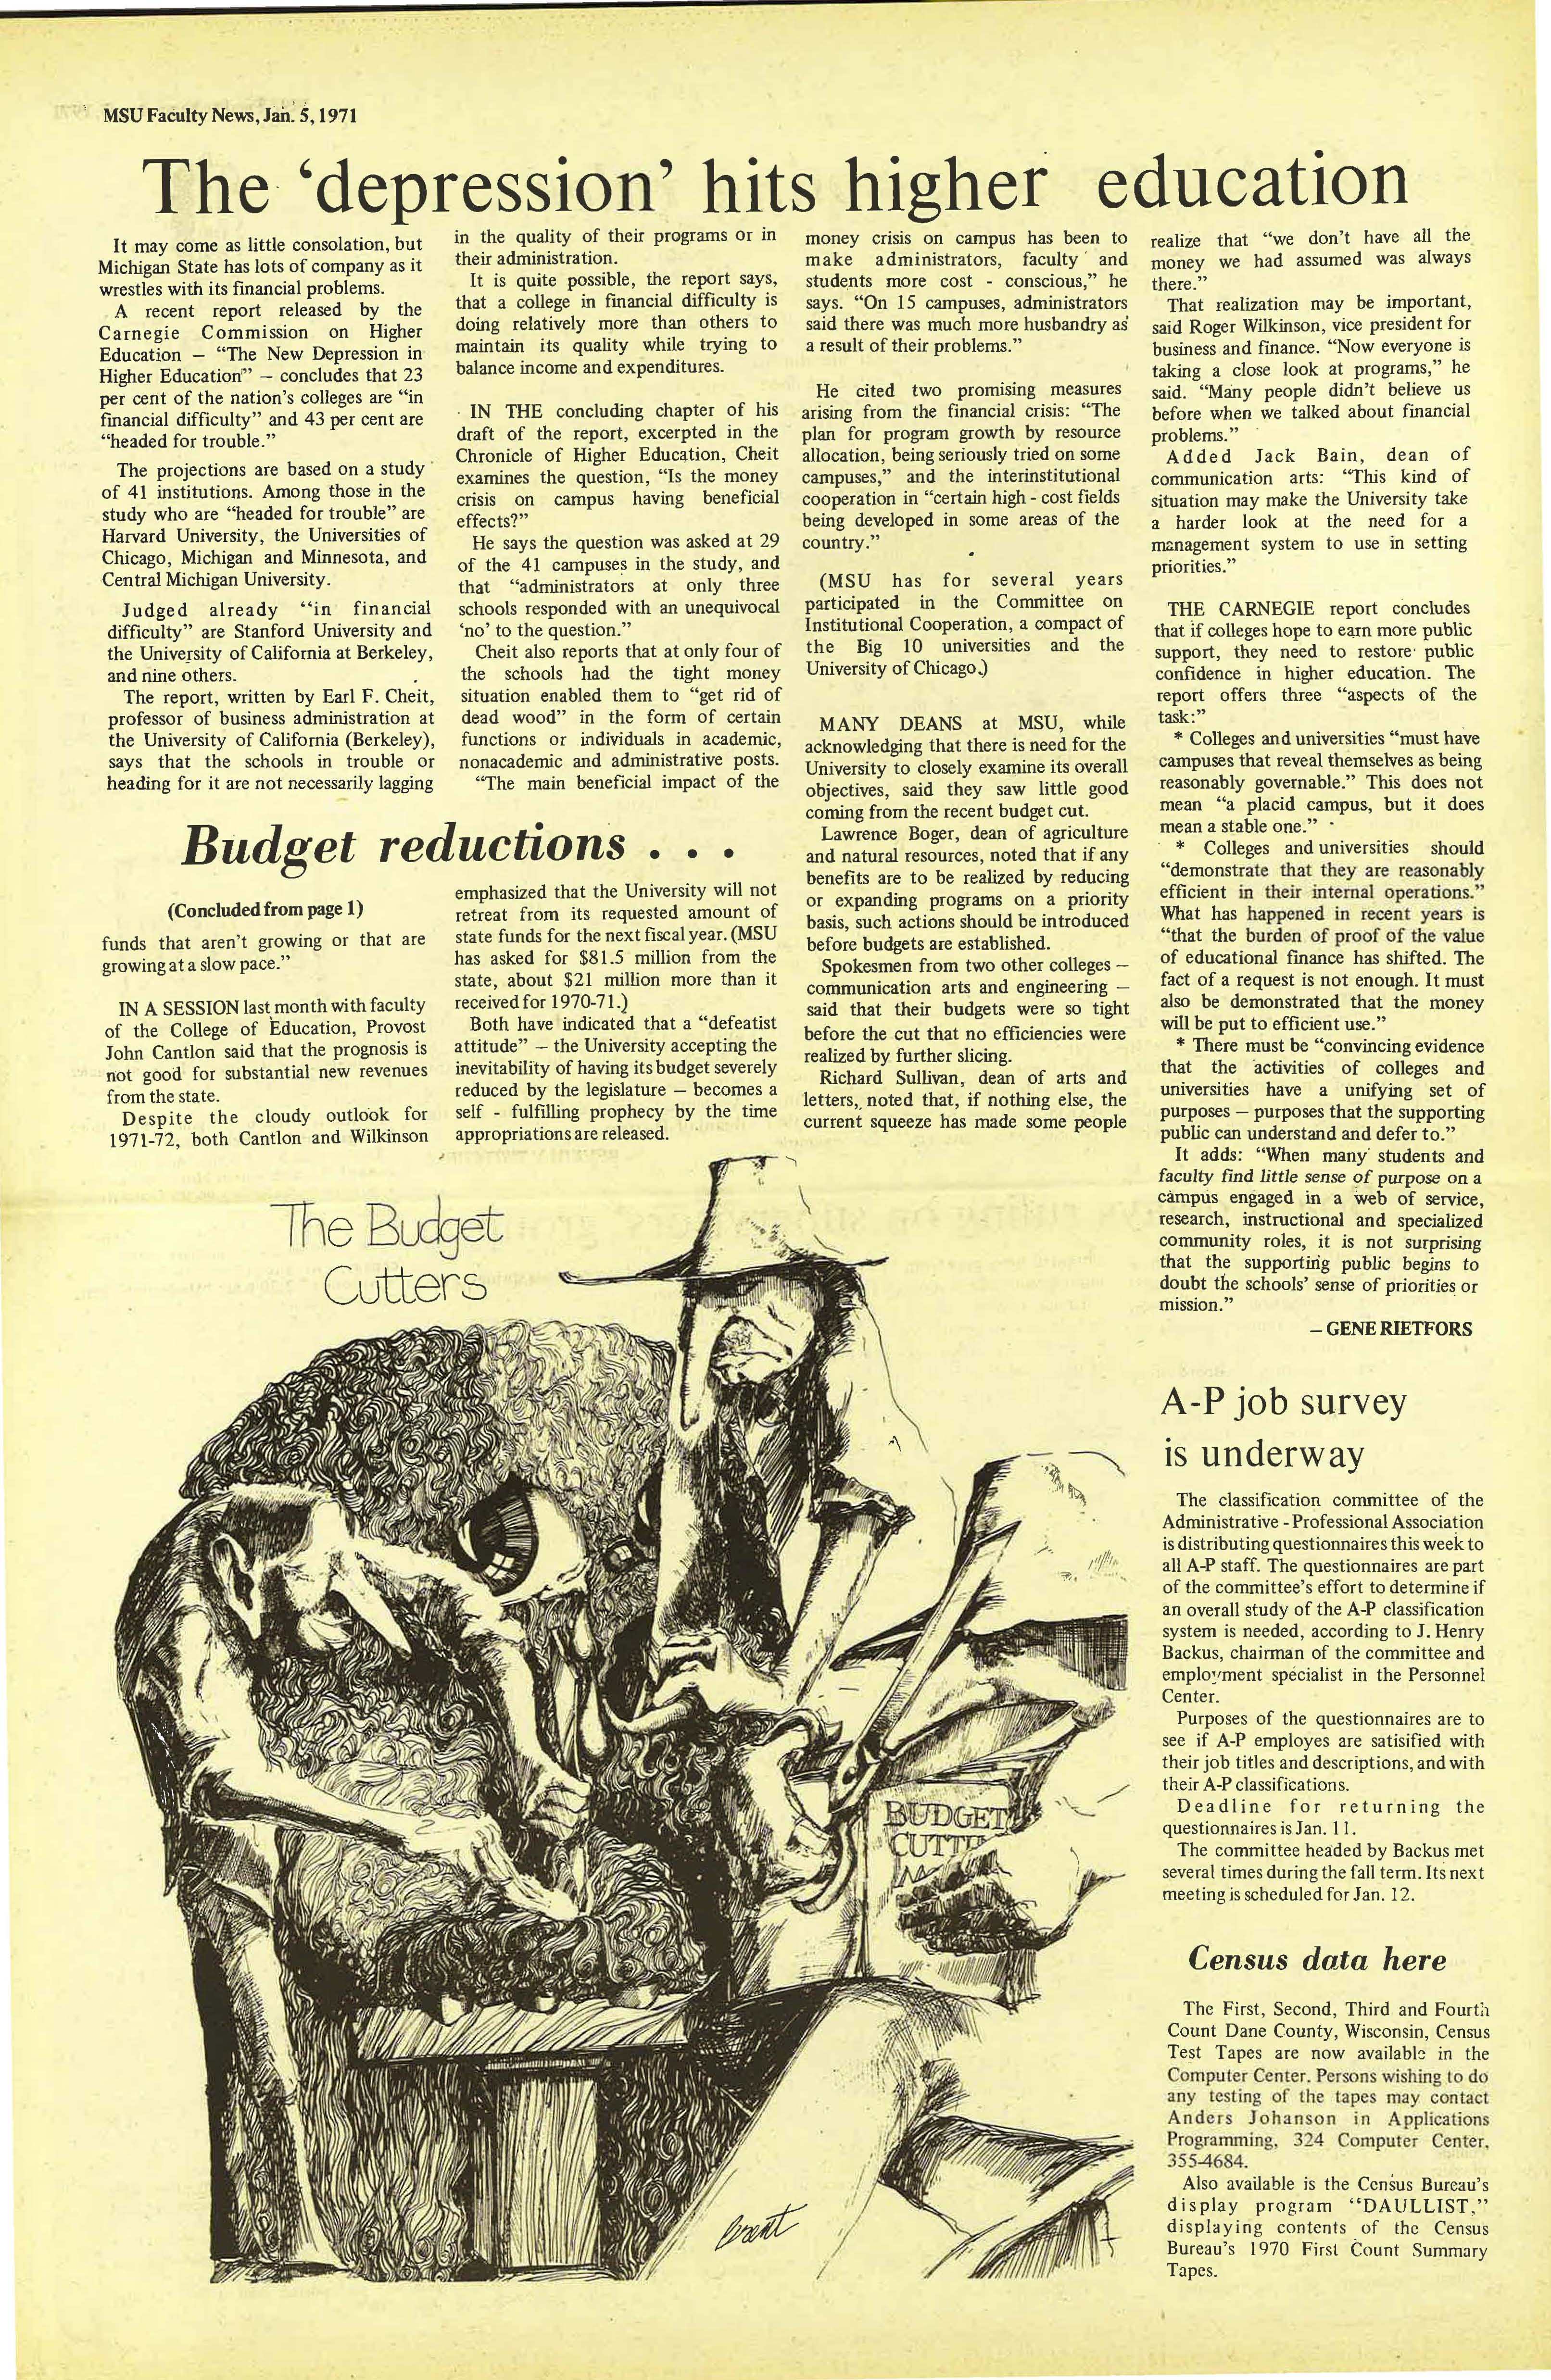 MSU News Bulletin, vol. 3, No. 11, December 2, 1971